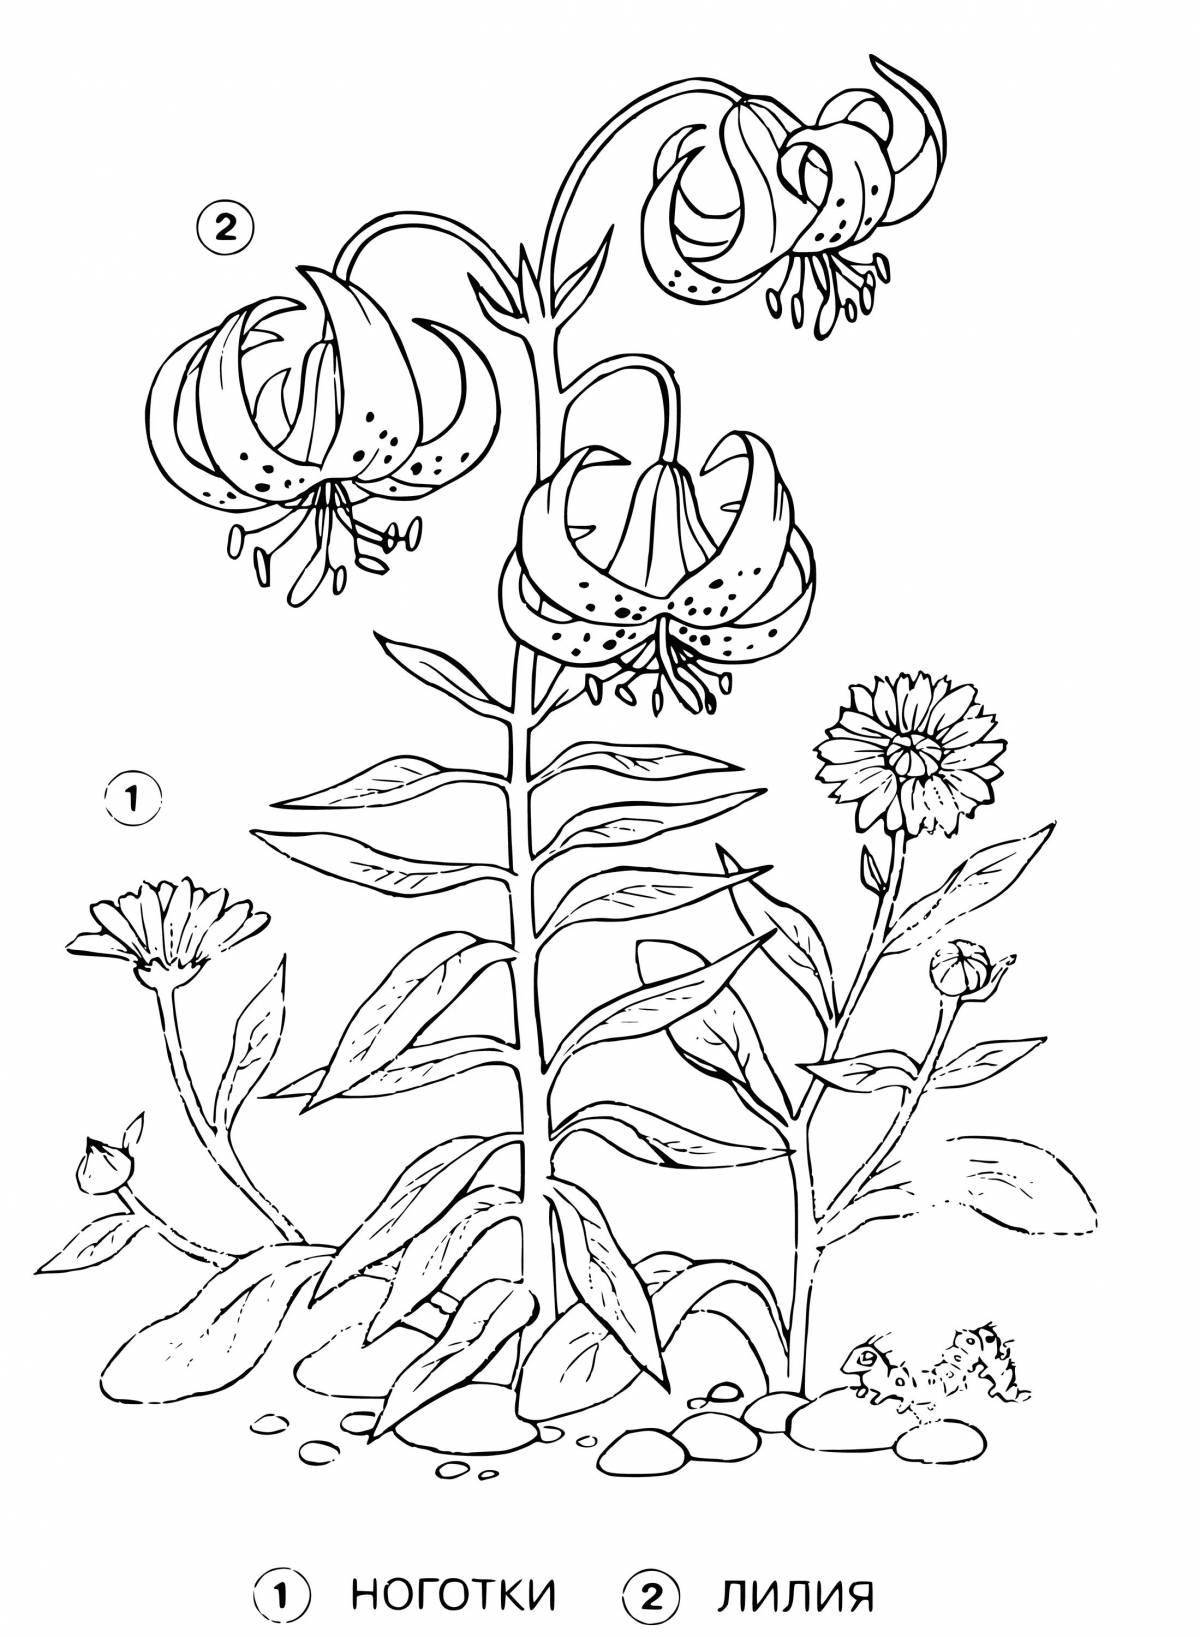 Exquisite lily saranka coloring book